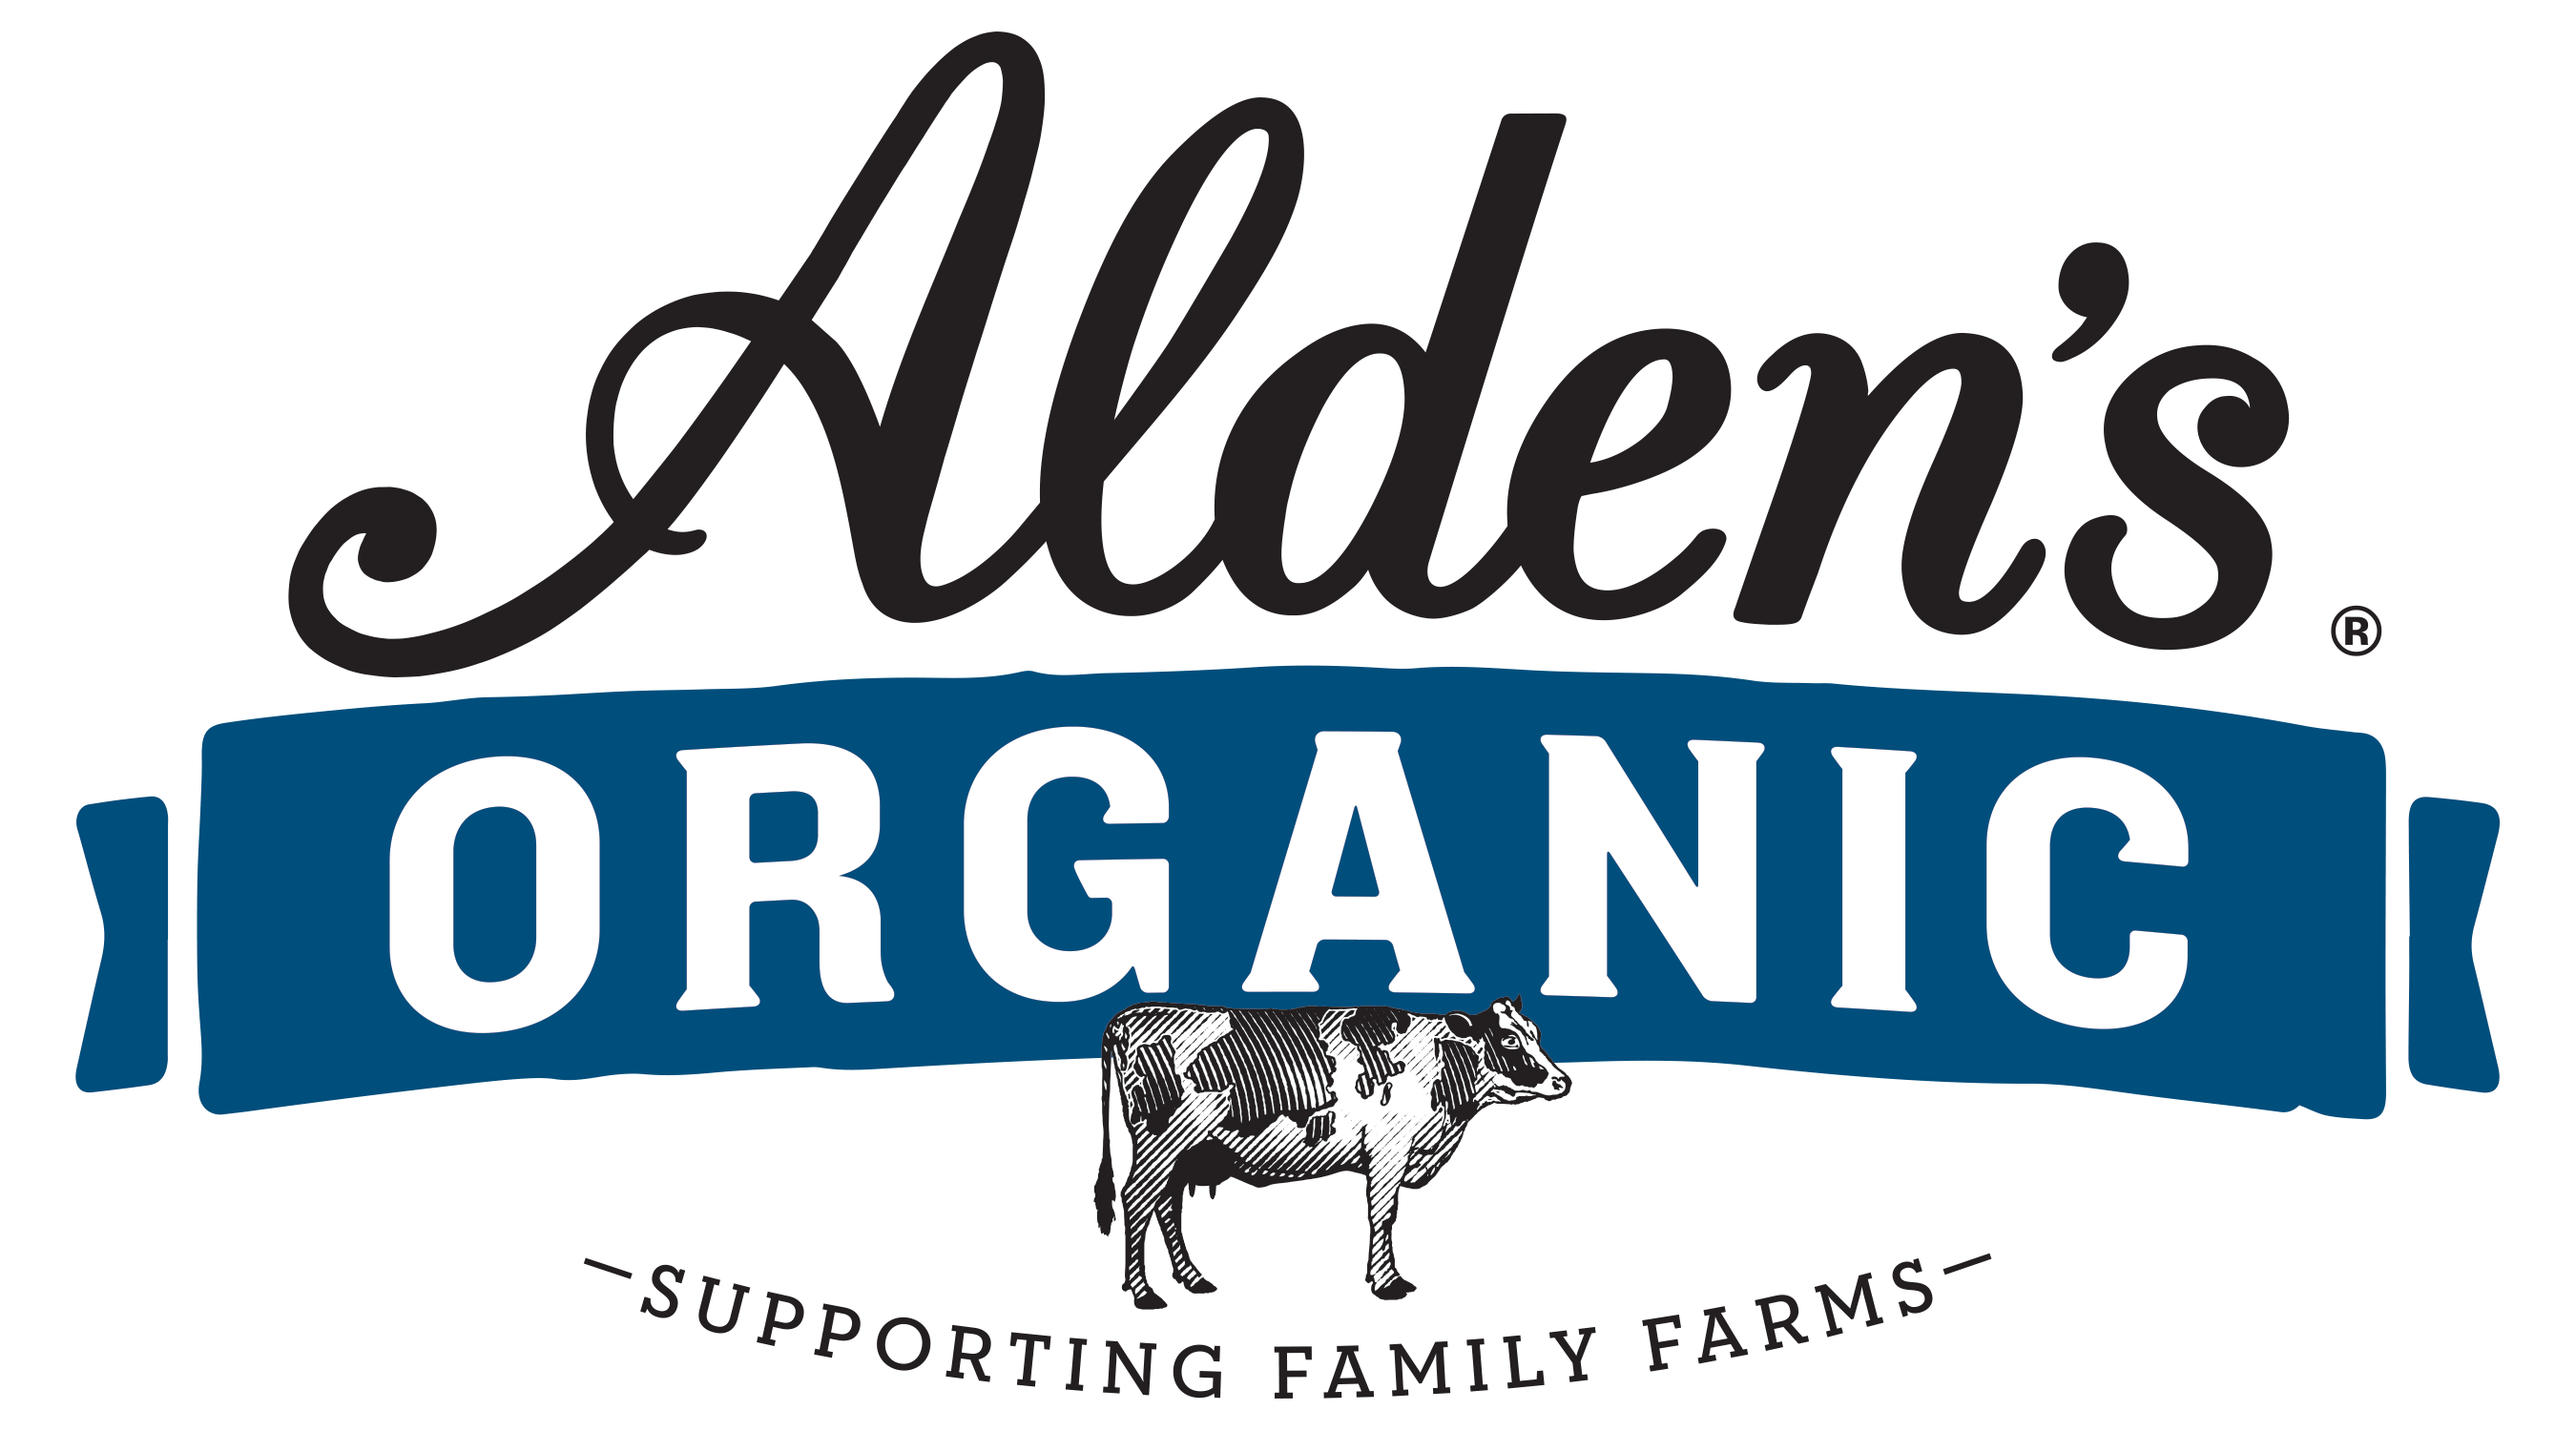 Creams Brand Logo - Alden's Ice Cream – Classic American Flavors | Clean Ingredients You ...